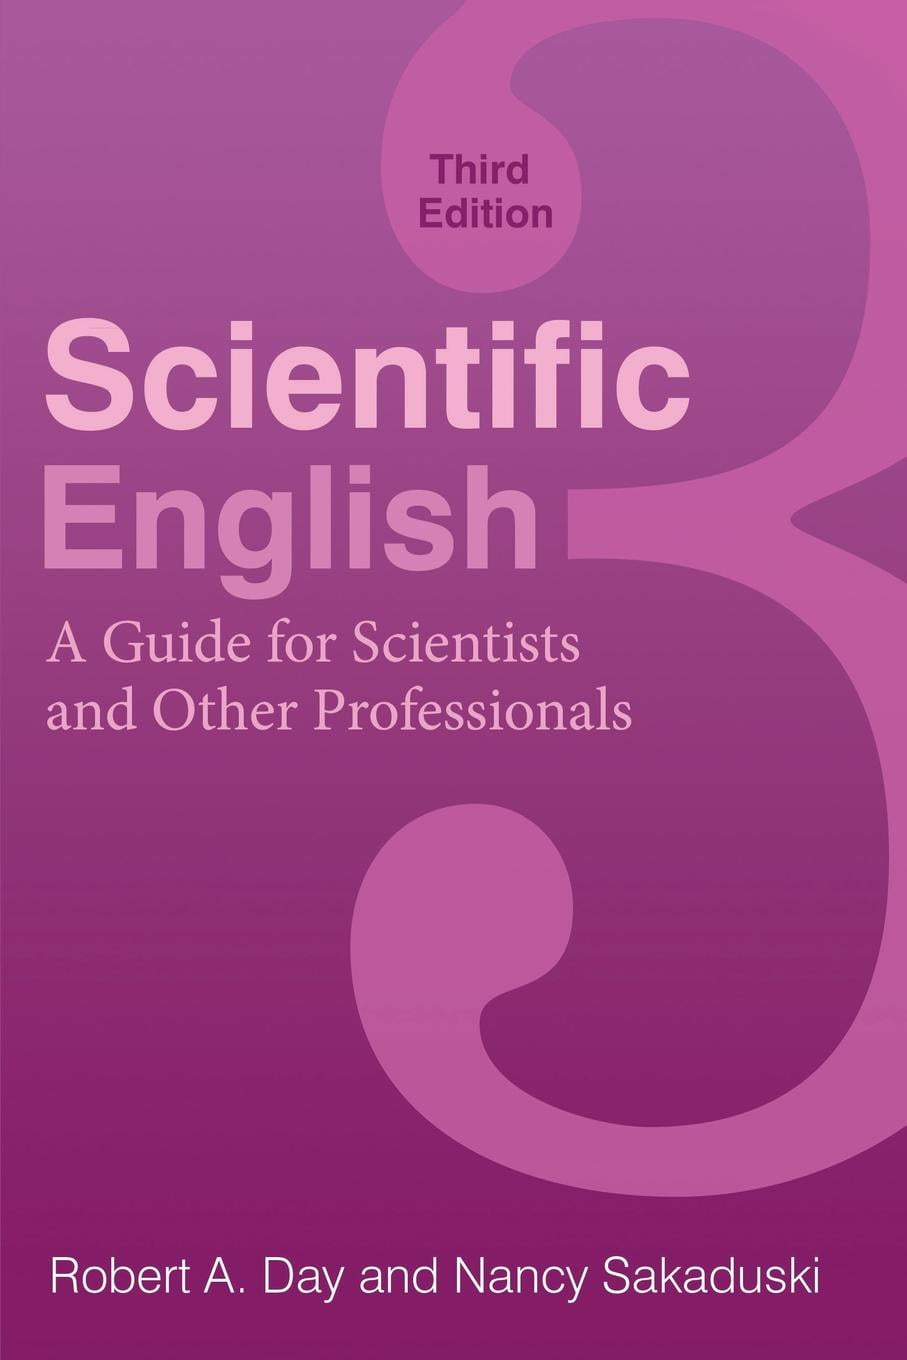 День науки на английском. Scientific English. English for Scientists книги. Science English. Science English book.